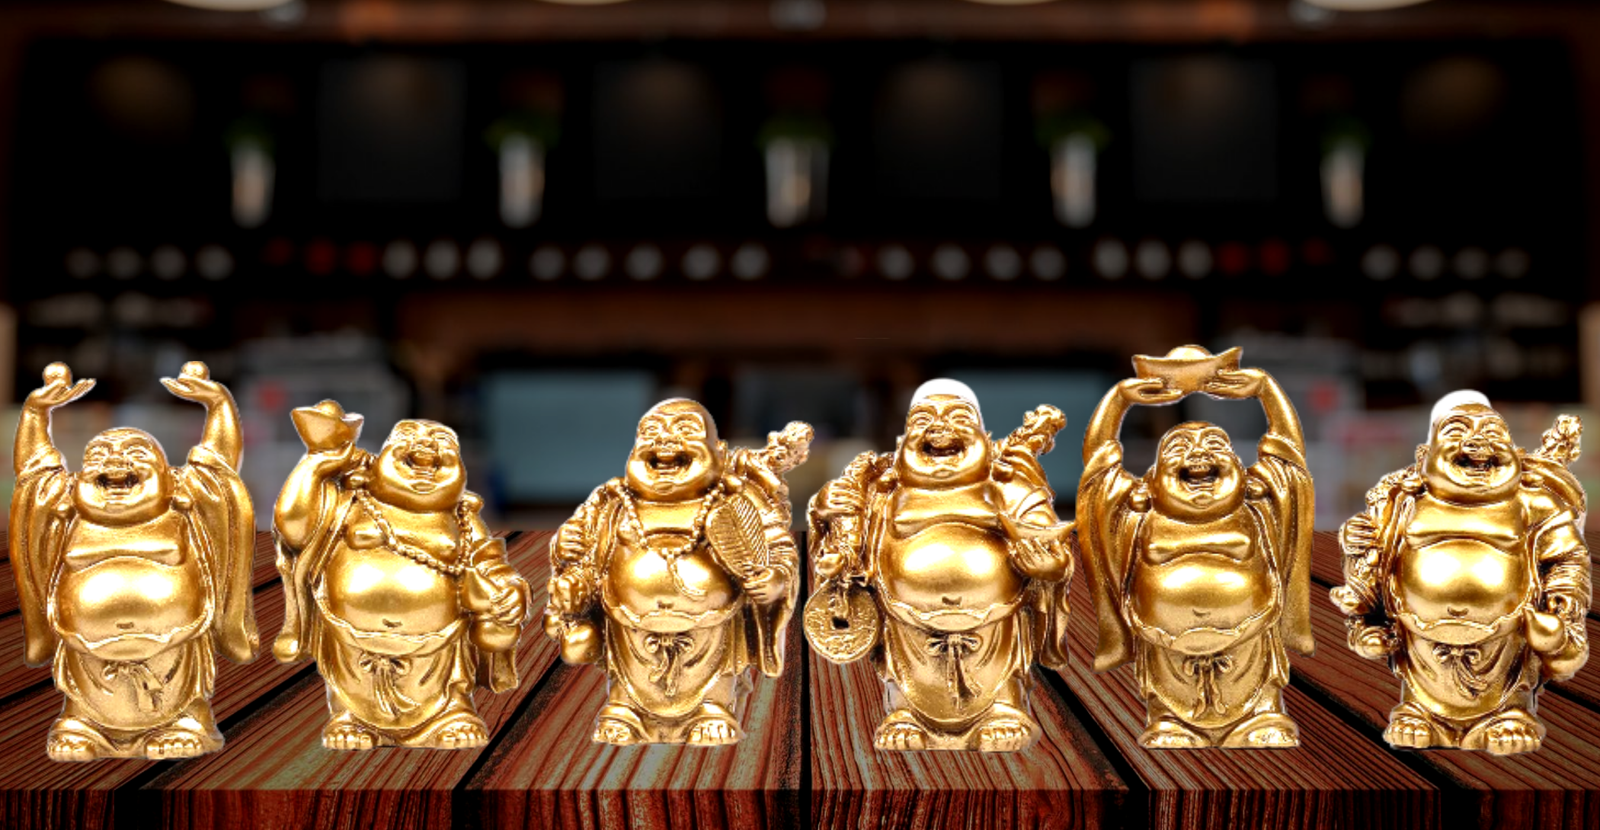 Why do people buy Buddha statues? – HD Asian Art